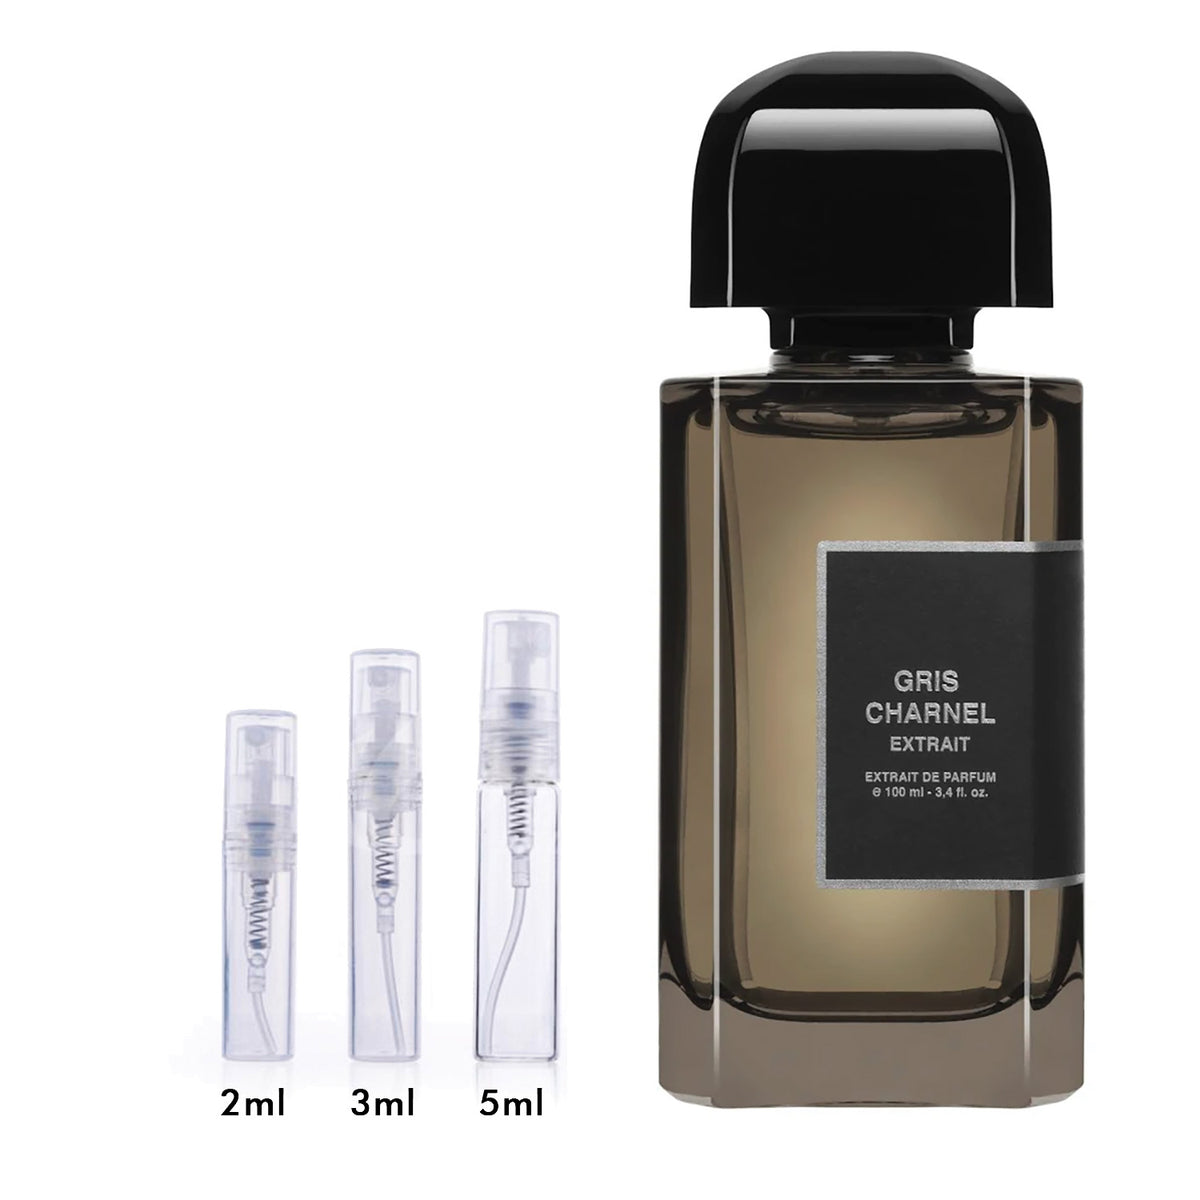 Gris Charnel Extrait BDK Parfums / Andele Mandele